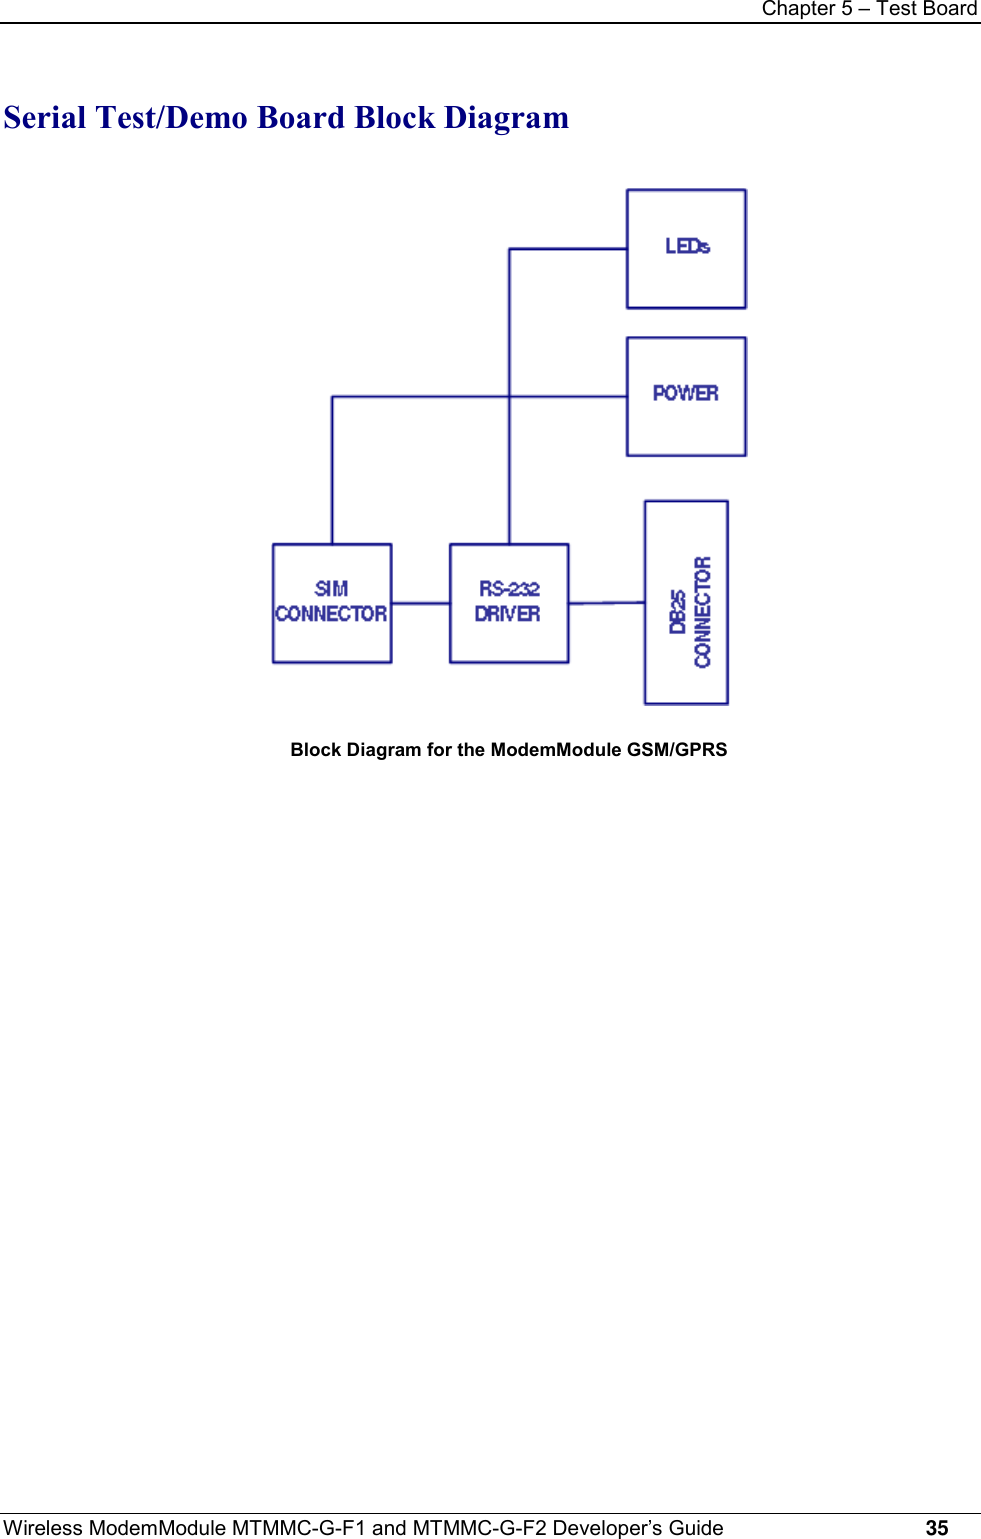 Chapter 5 – Test BoardWireless ModemModule MTMMC-G-F1 and MTMMC-G-F2 Developer’s Guide     35Serial Test/Demo Board Block DiagramBlock Diagram for the ModemModule GSM/GPRS